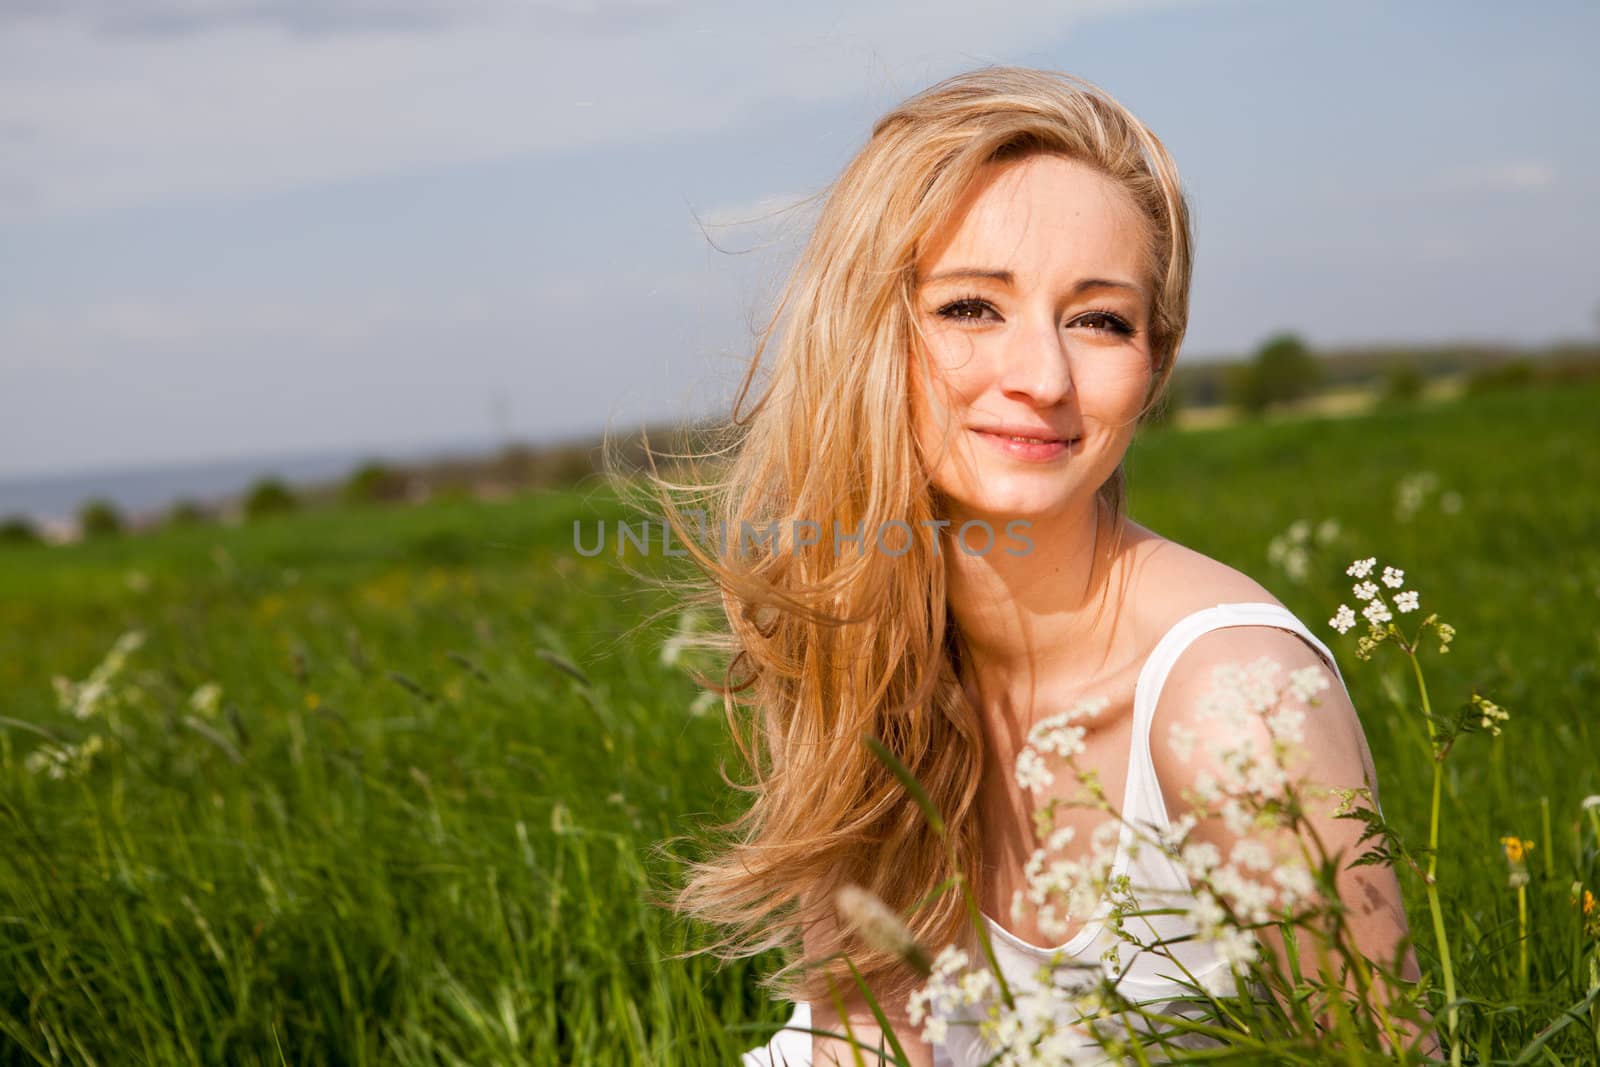 beautiful blonde woman outdoor in summer happy